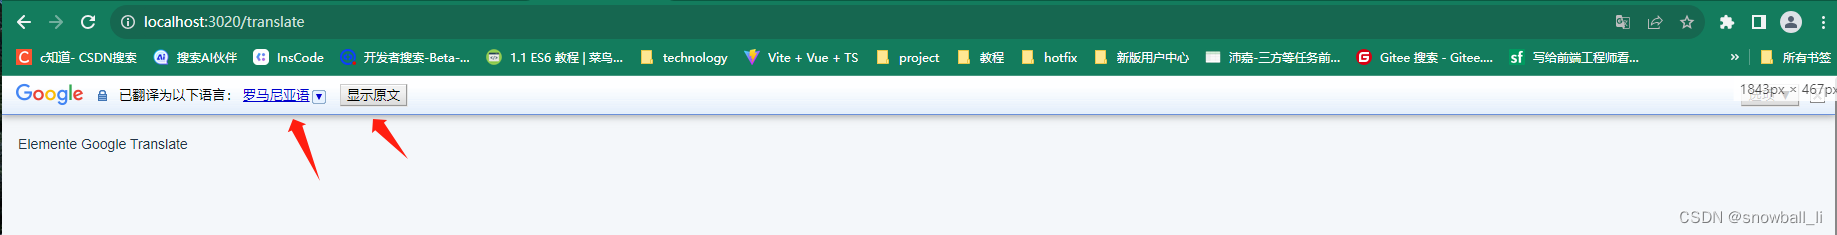 vue3-ts-vite：Google 多语言调试 / 网页中插入谷歌翻译元素 / 翻译